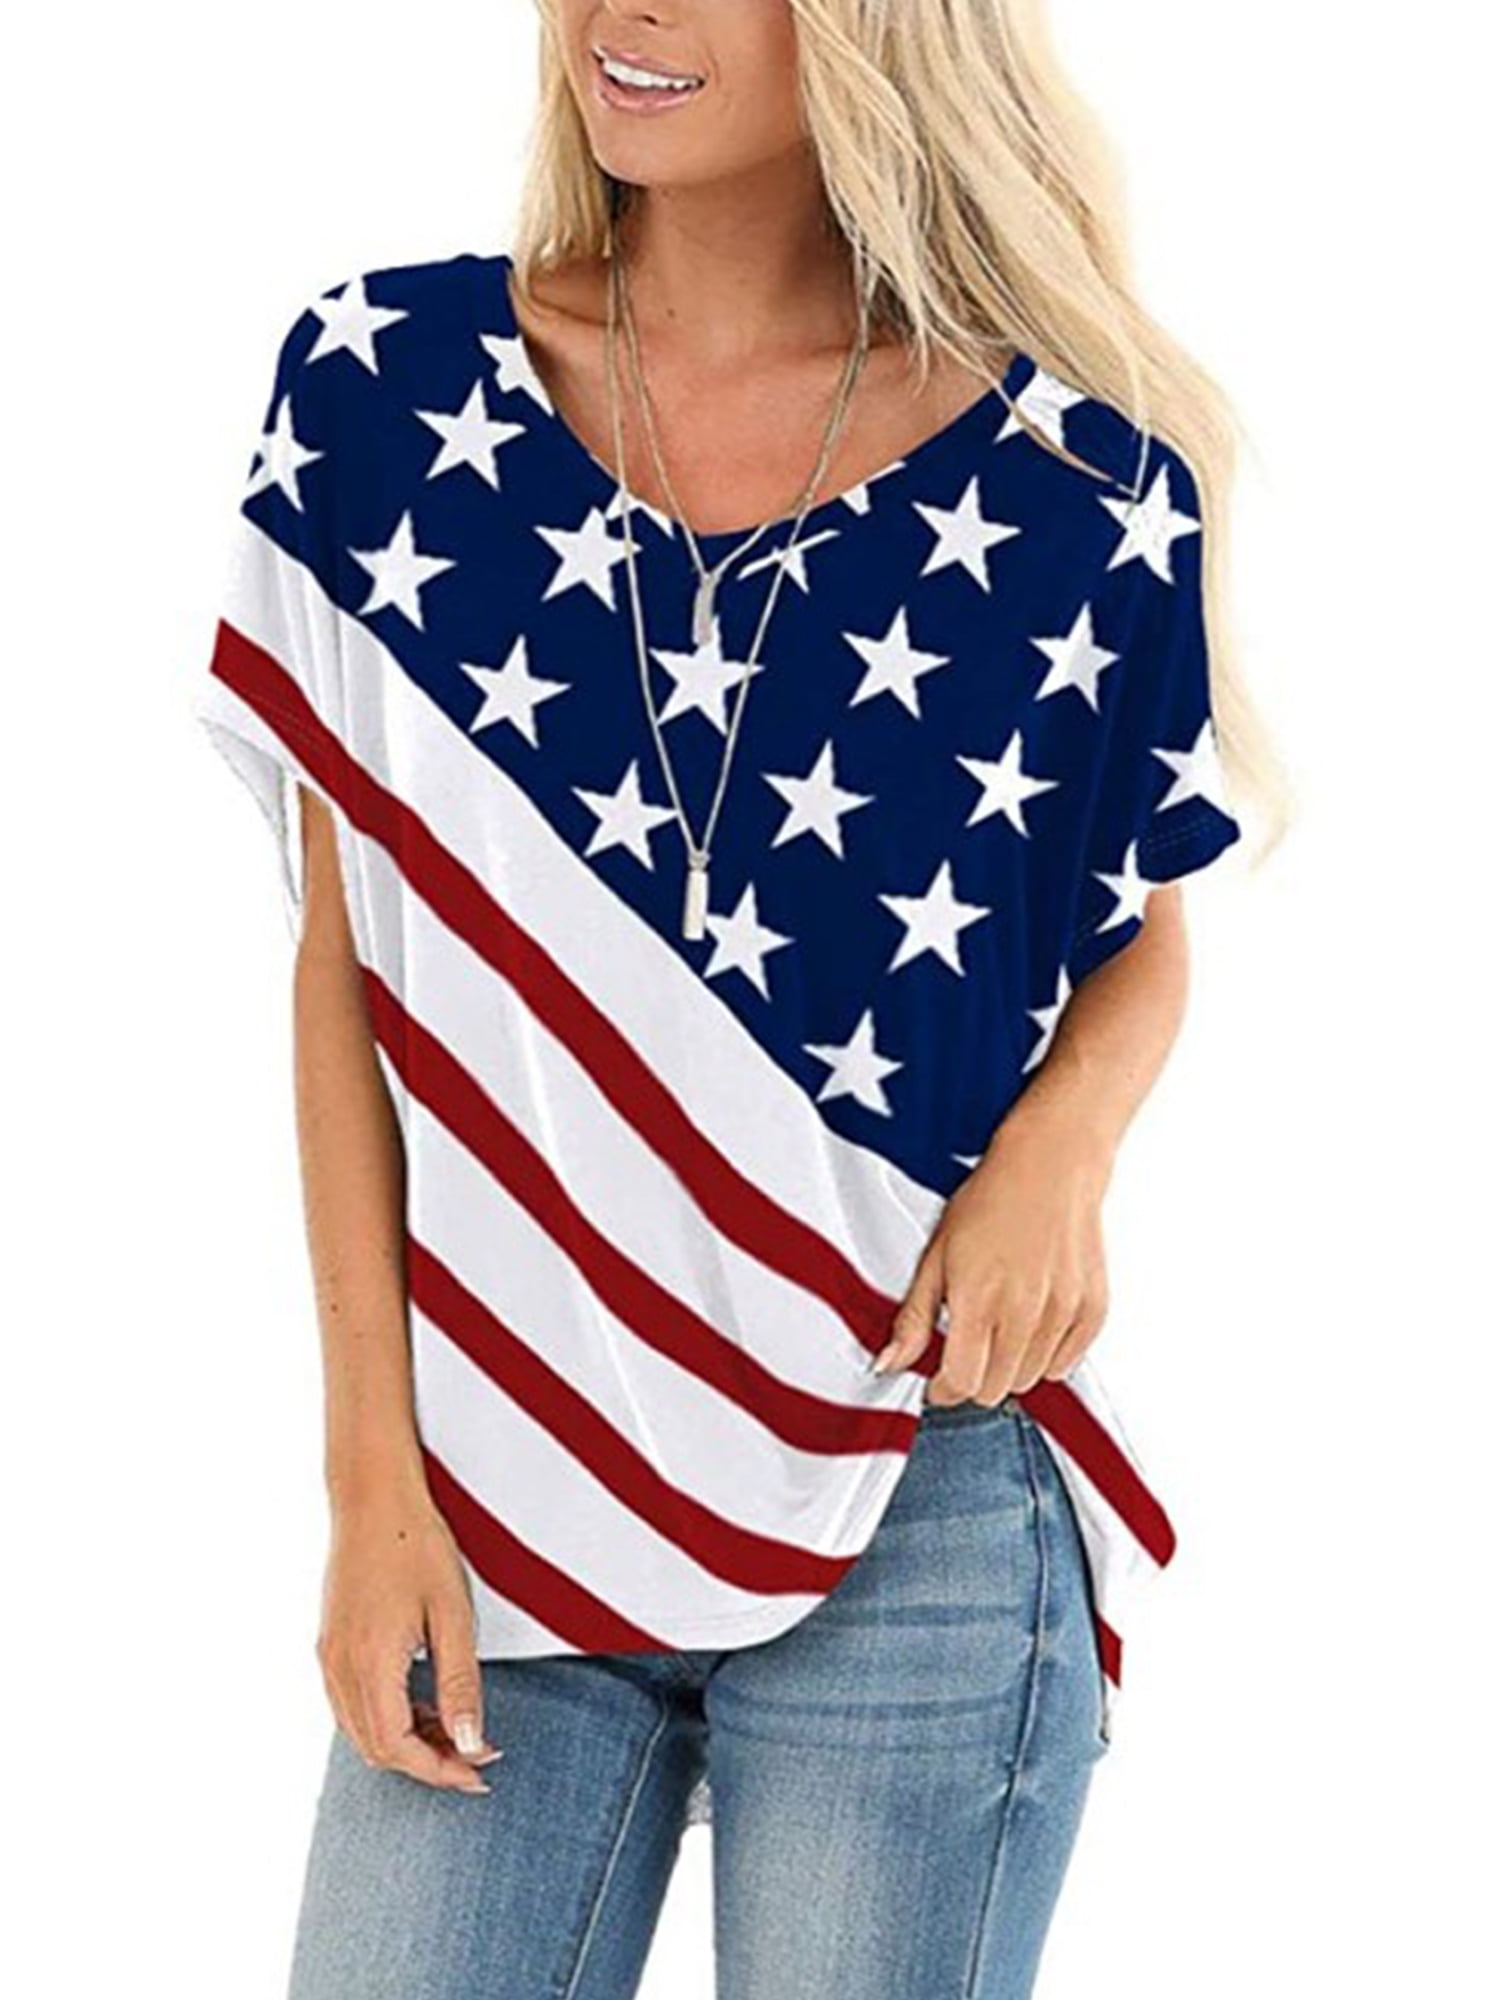 4th of July Womens Shirt 4th of July Shirt Patriotic 4th of July Tee Fourth of July Shirt Small White USA ON SALE Patriotic Shirt